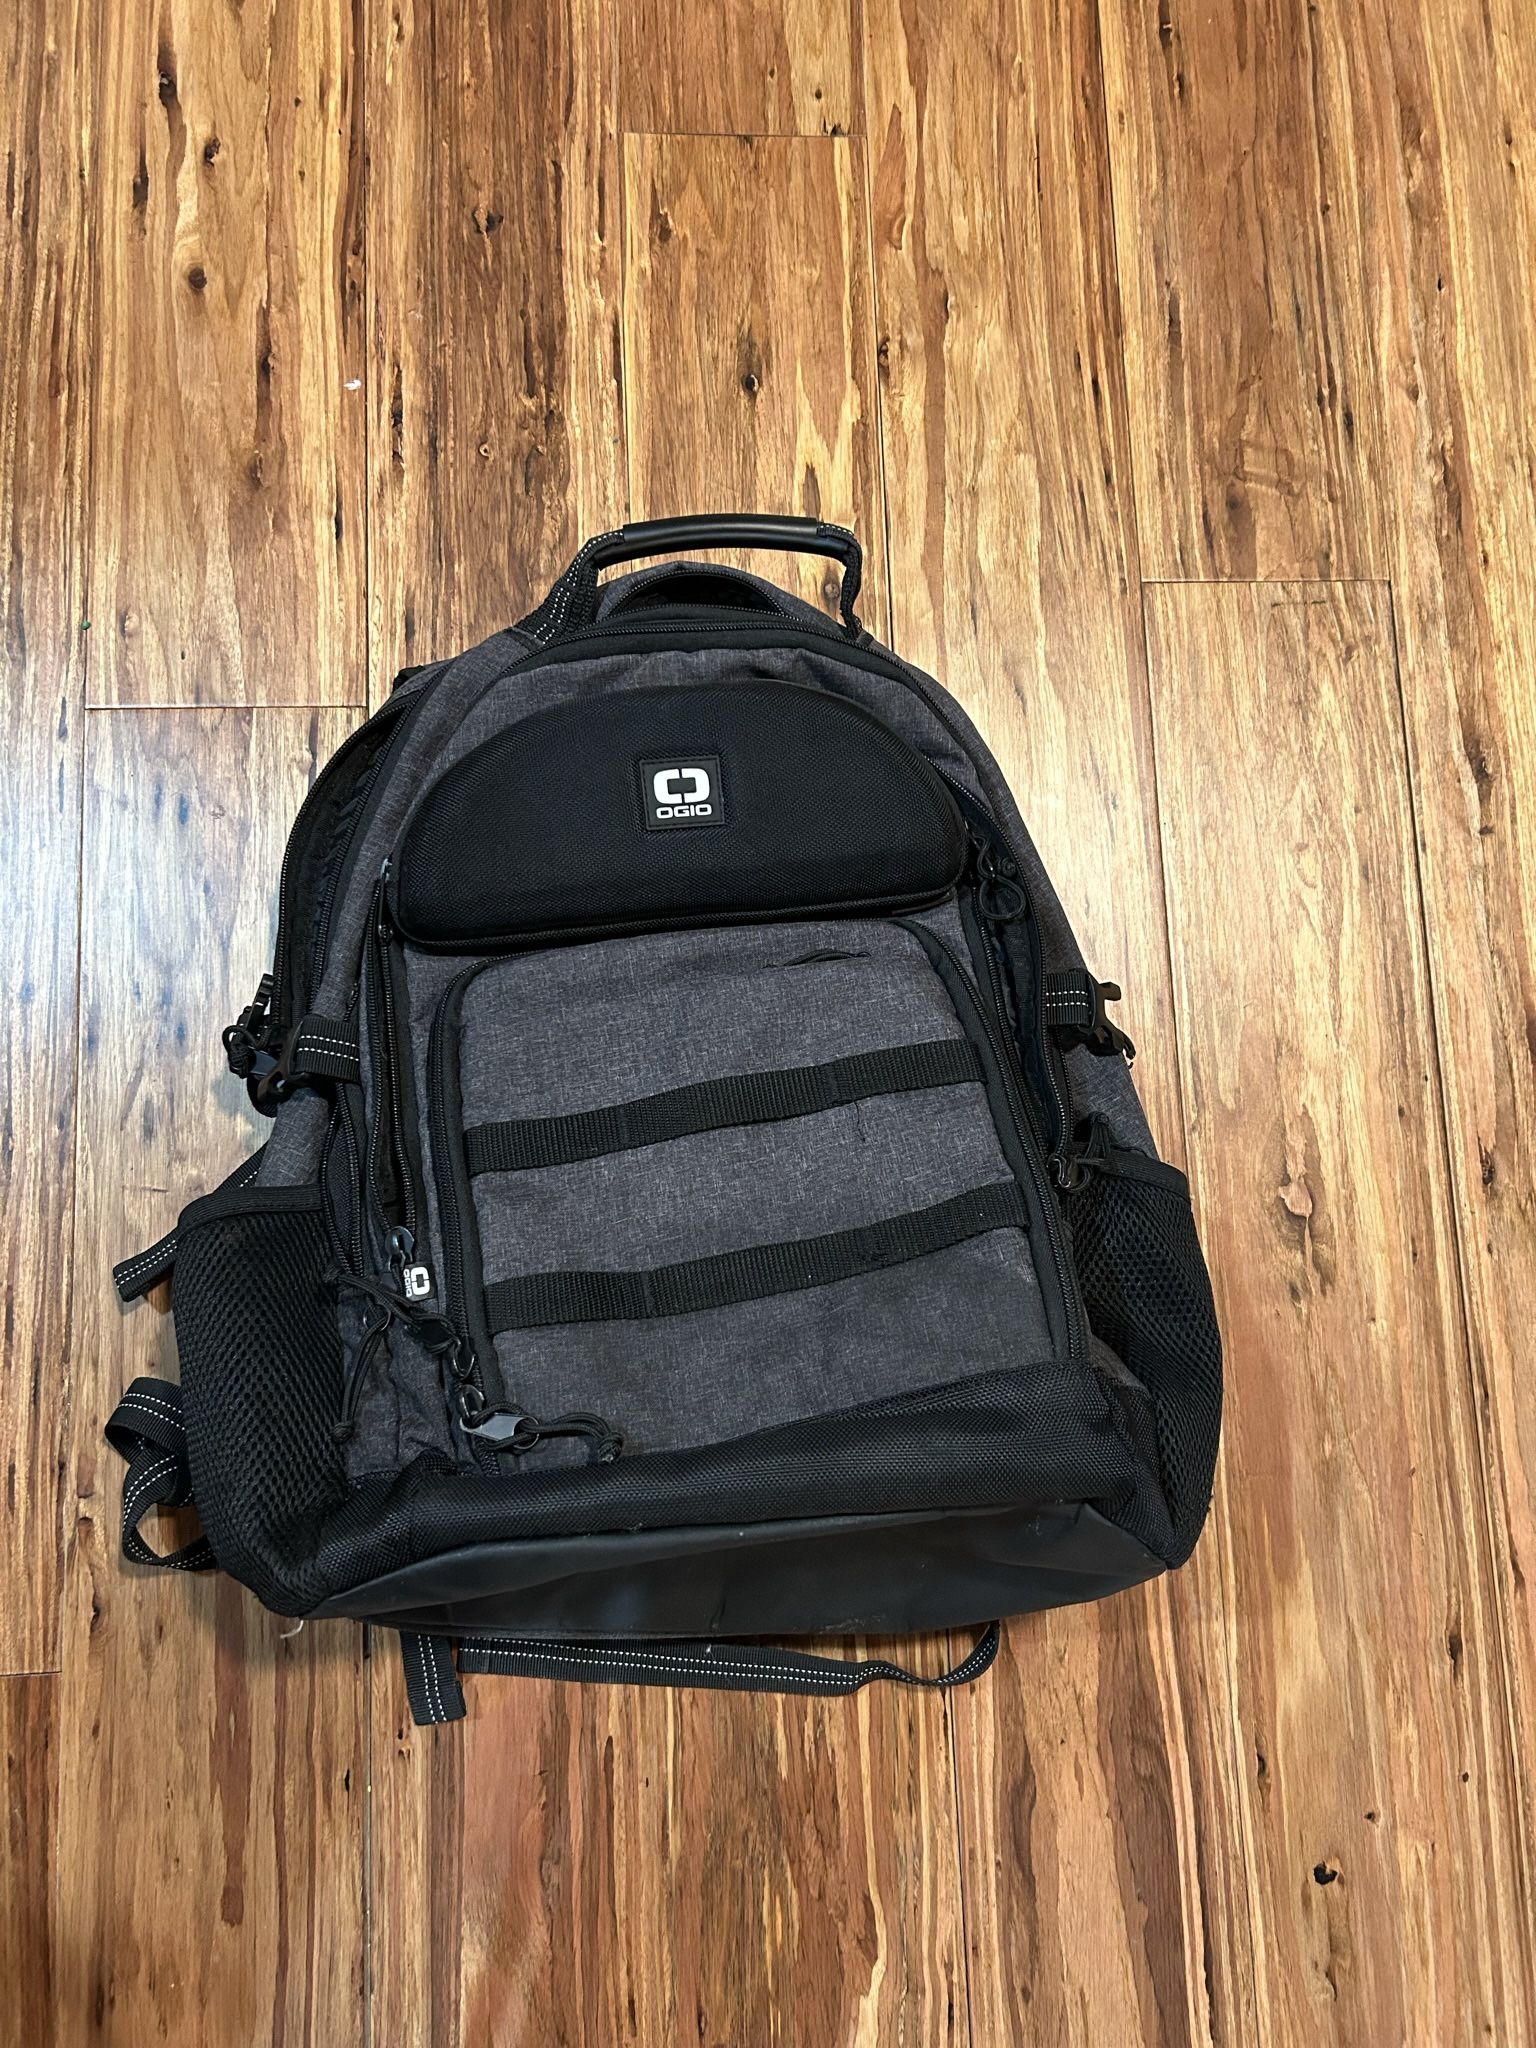 Ogio Prospect Backpack